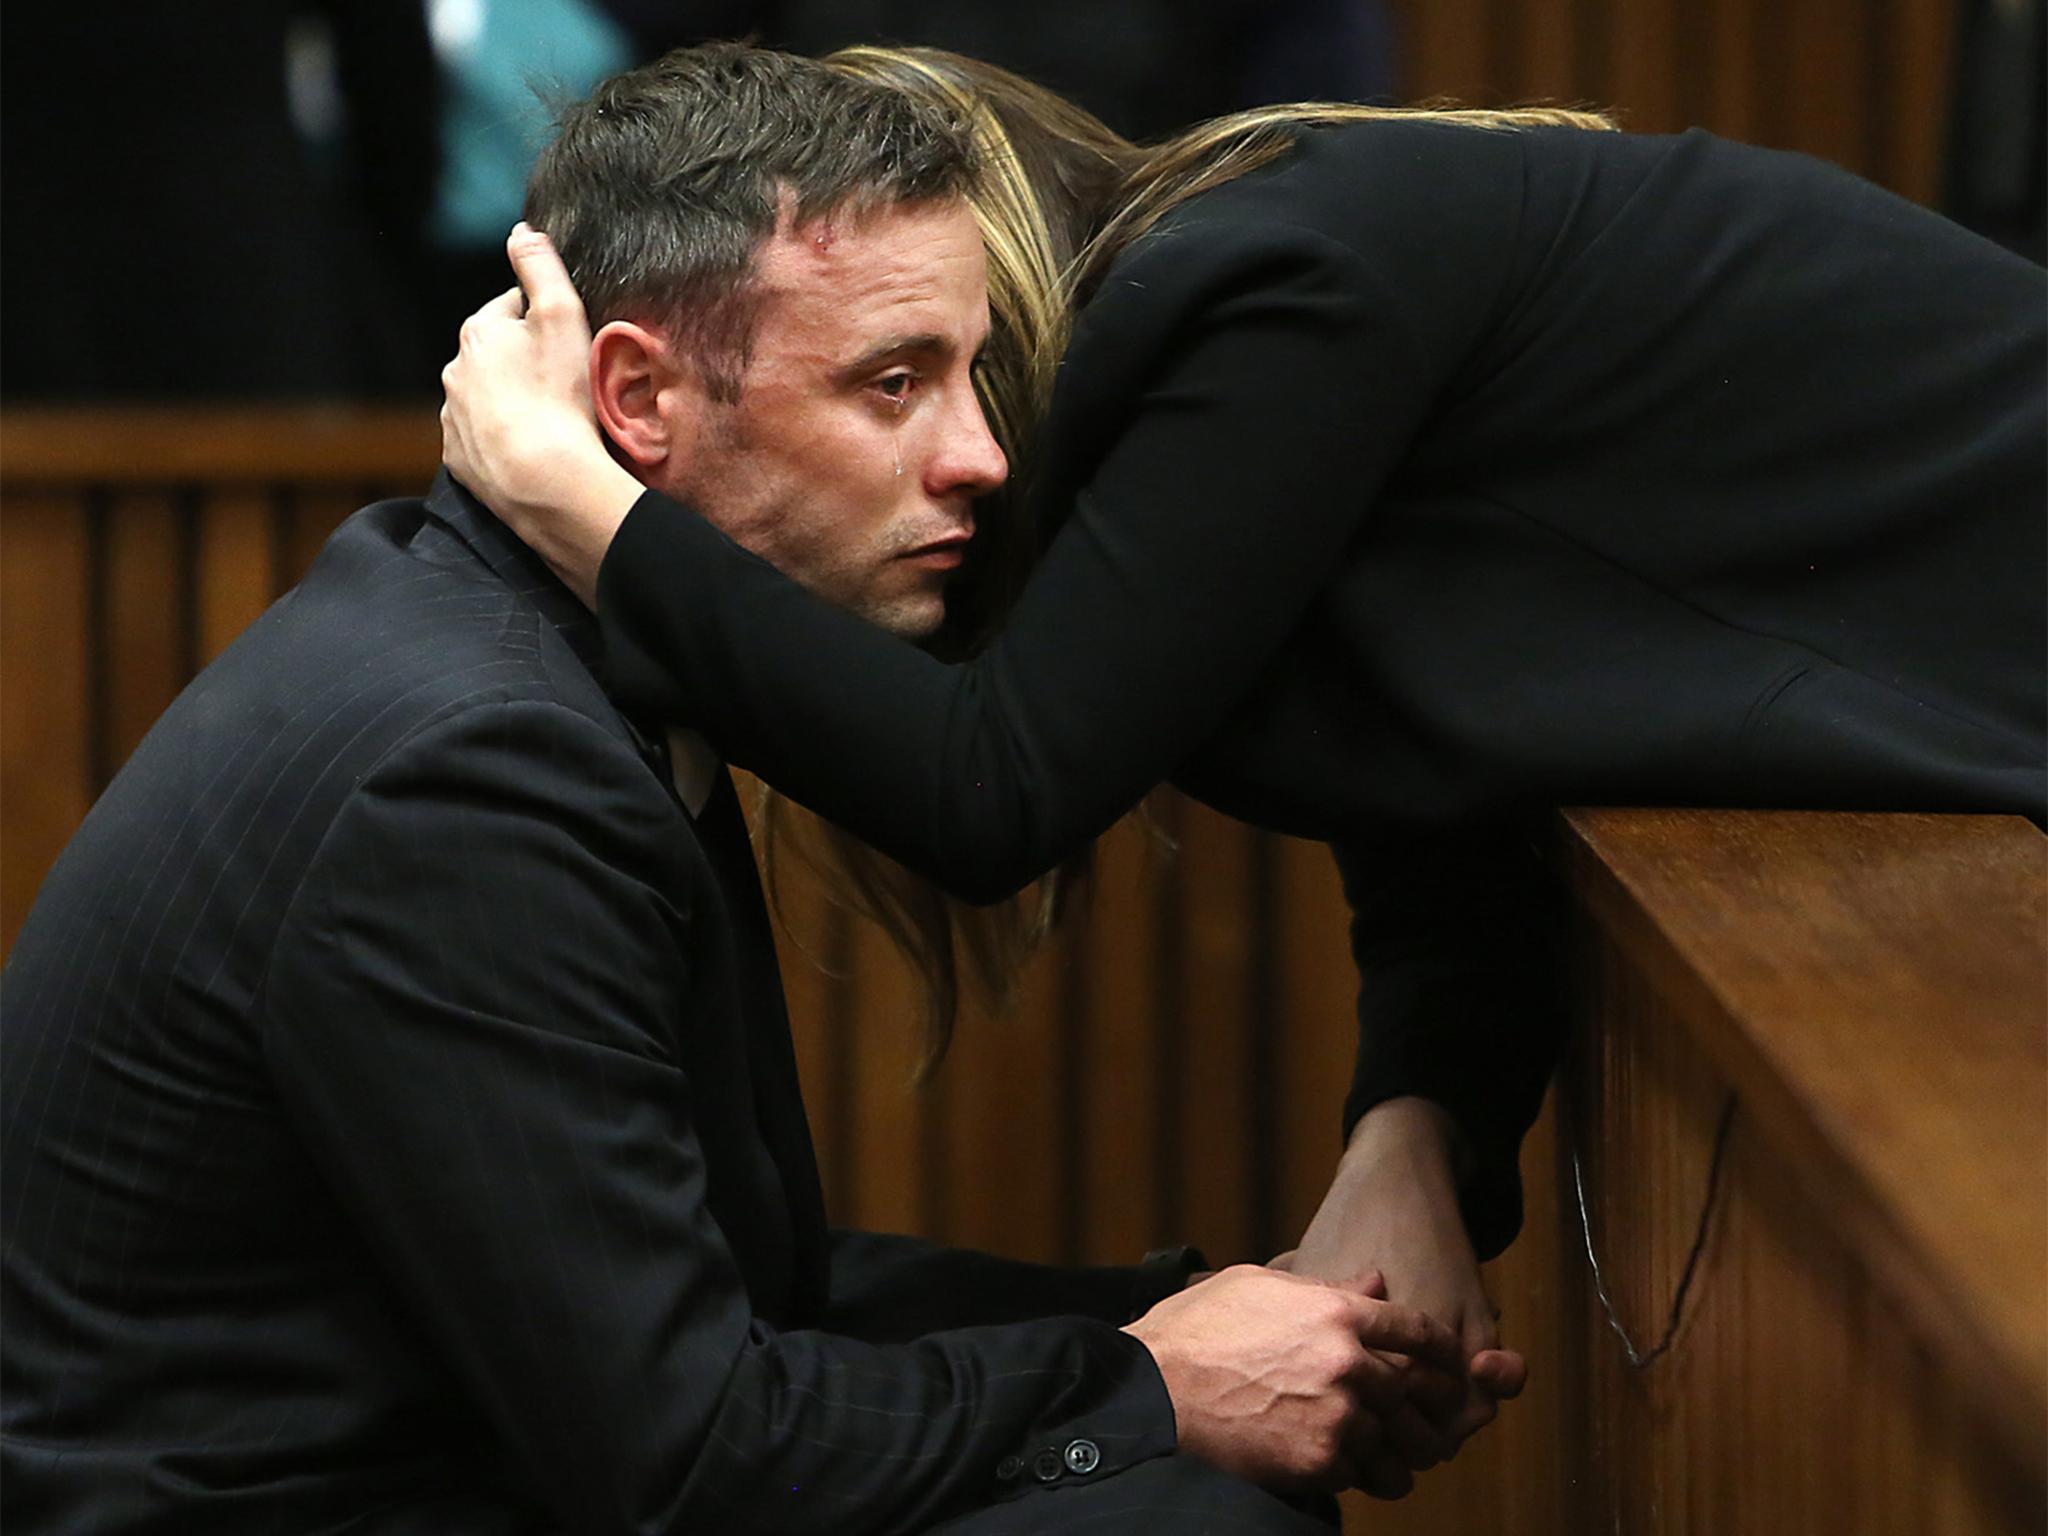 Pistorius is serving a 13-year jail sentence for killing his girlfriend, Reeva Steenkamp